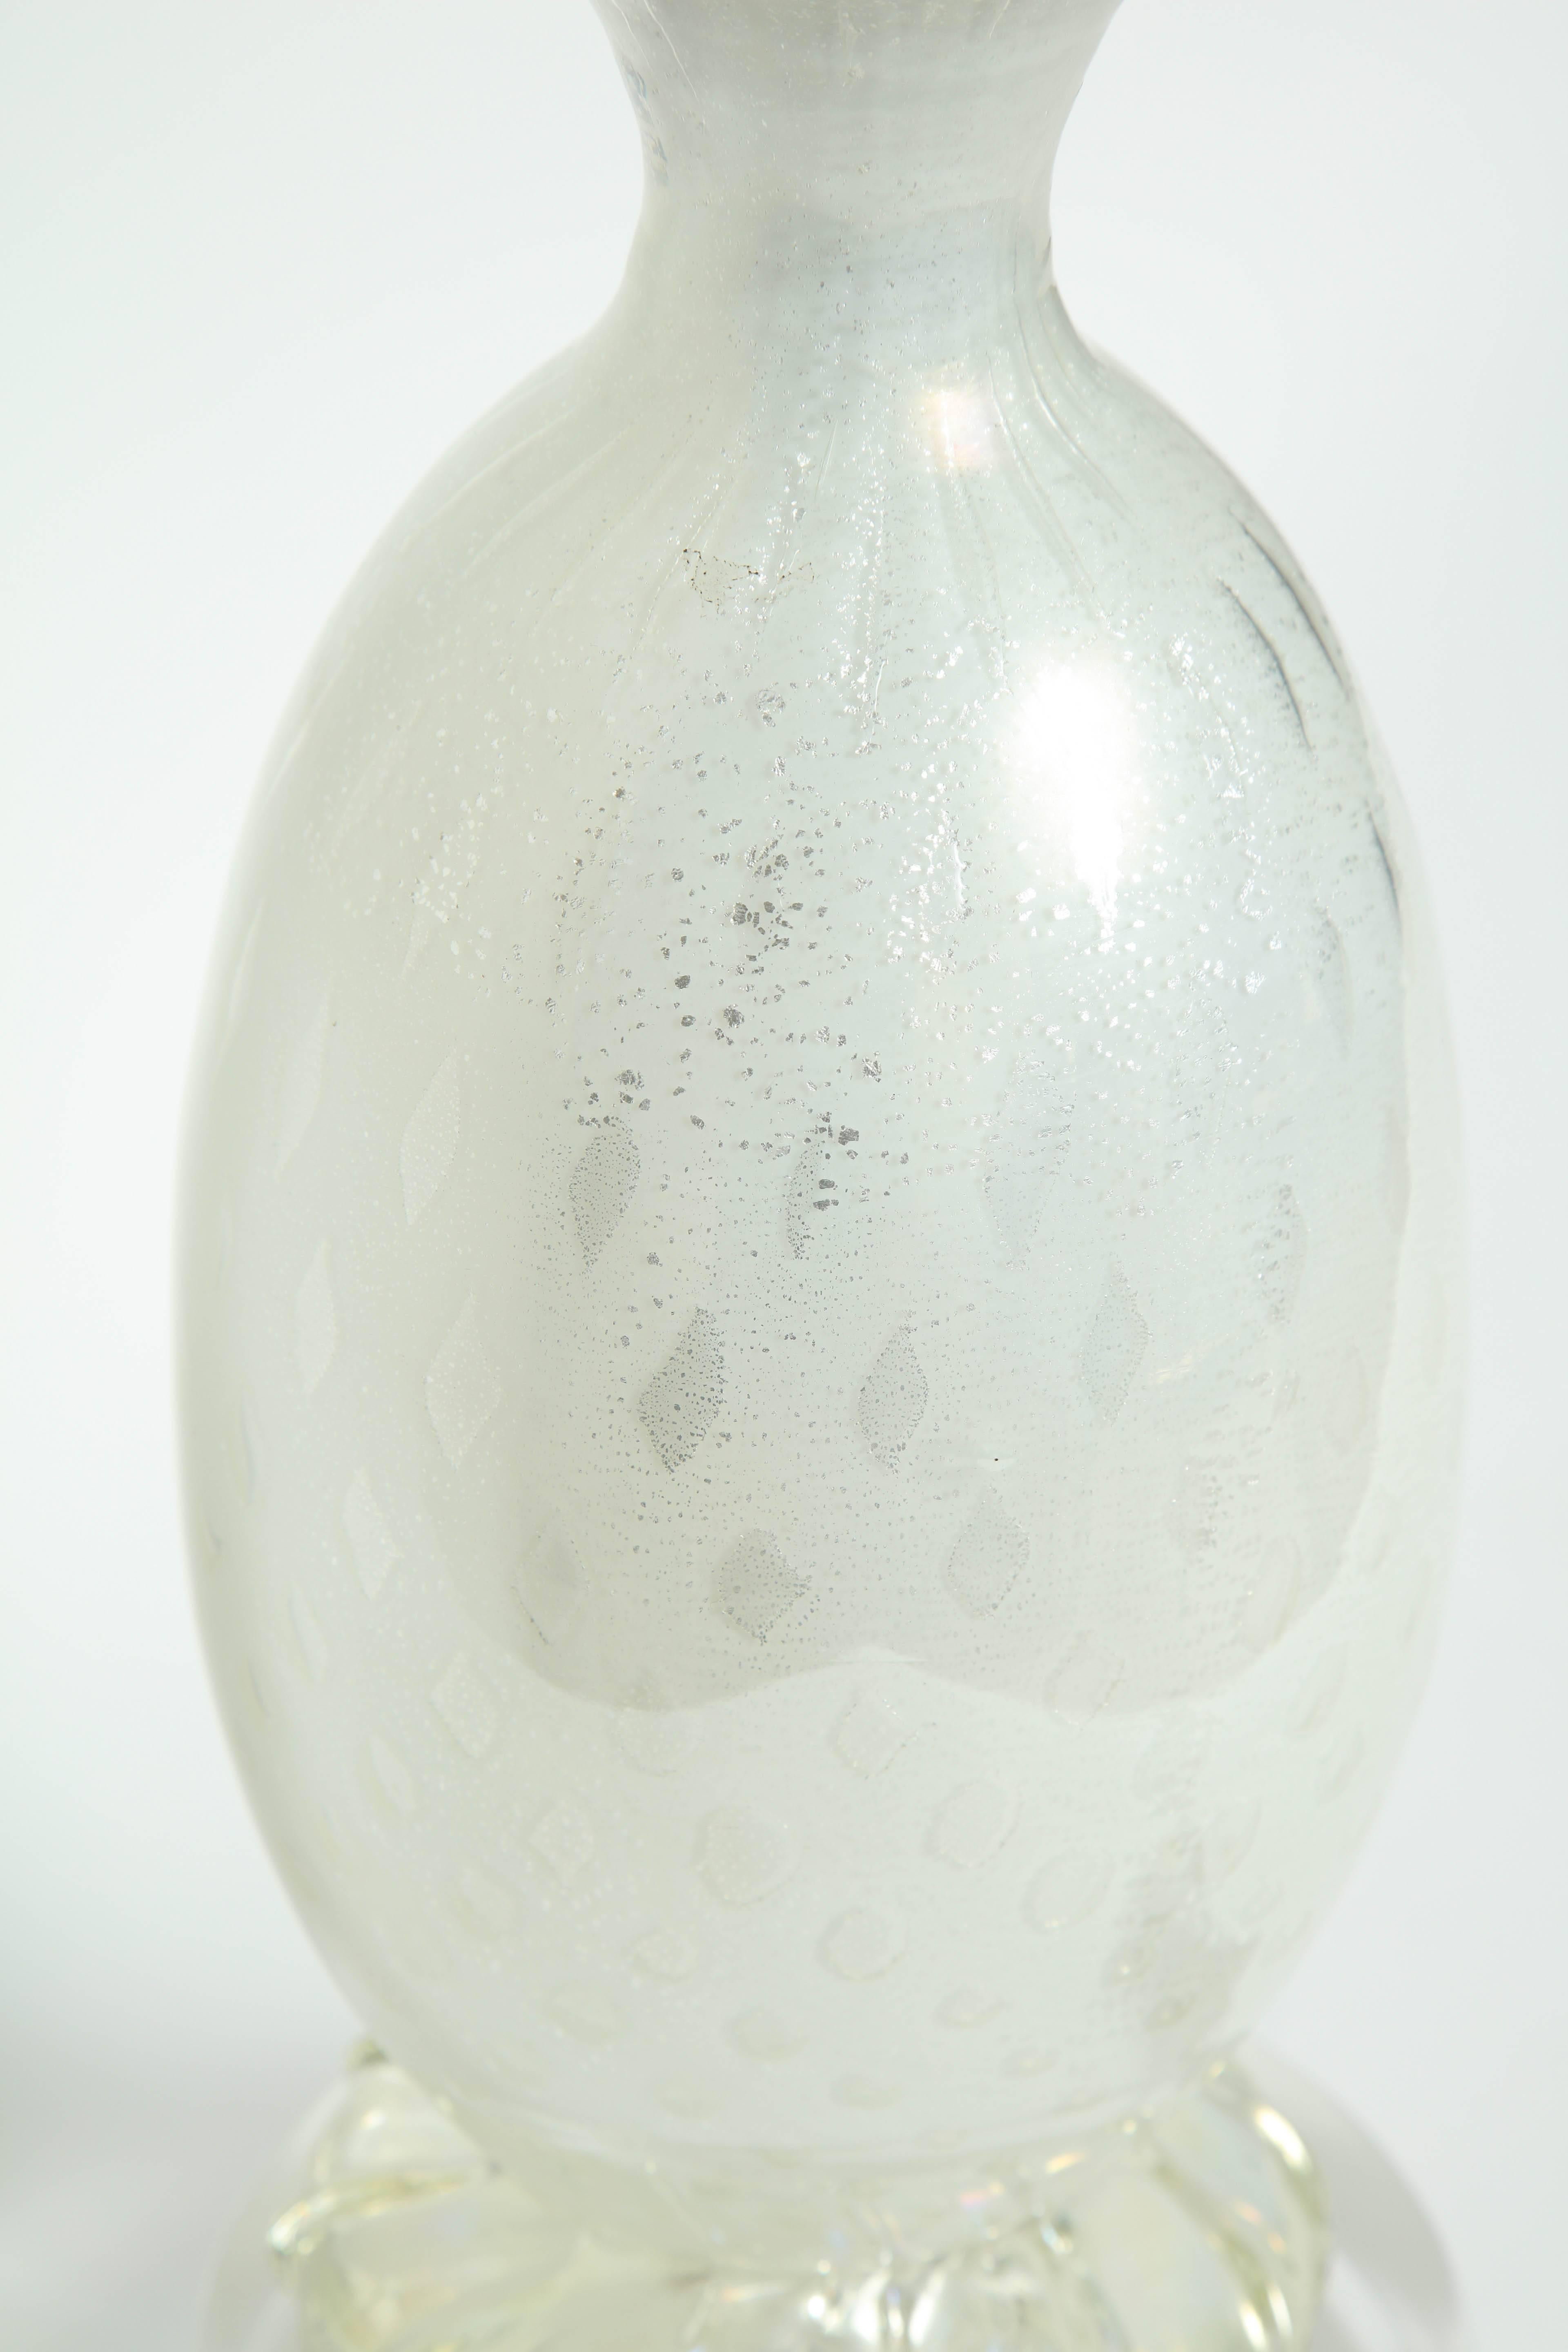 Seguso Pearl White Murano Glass Lamps 2